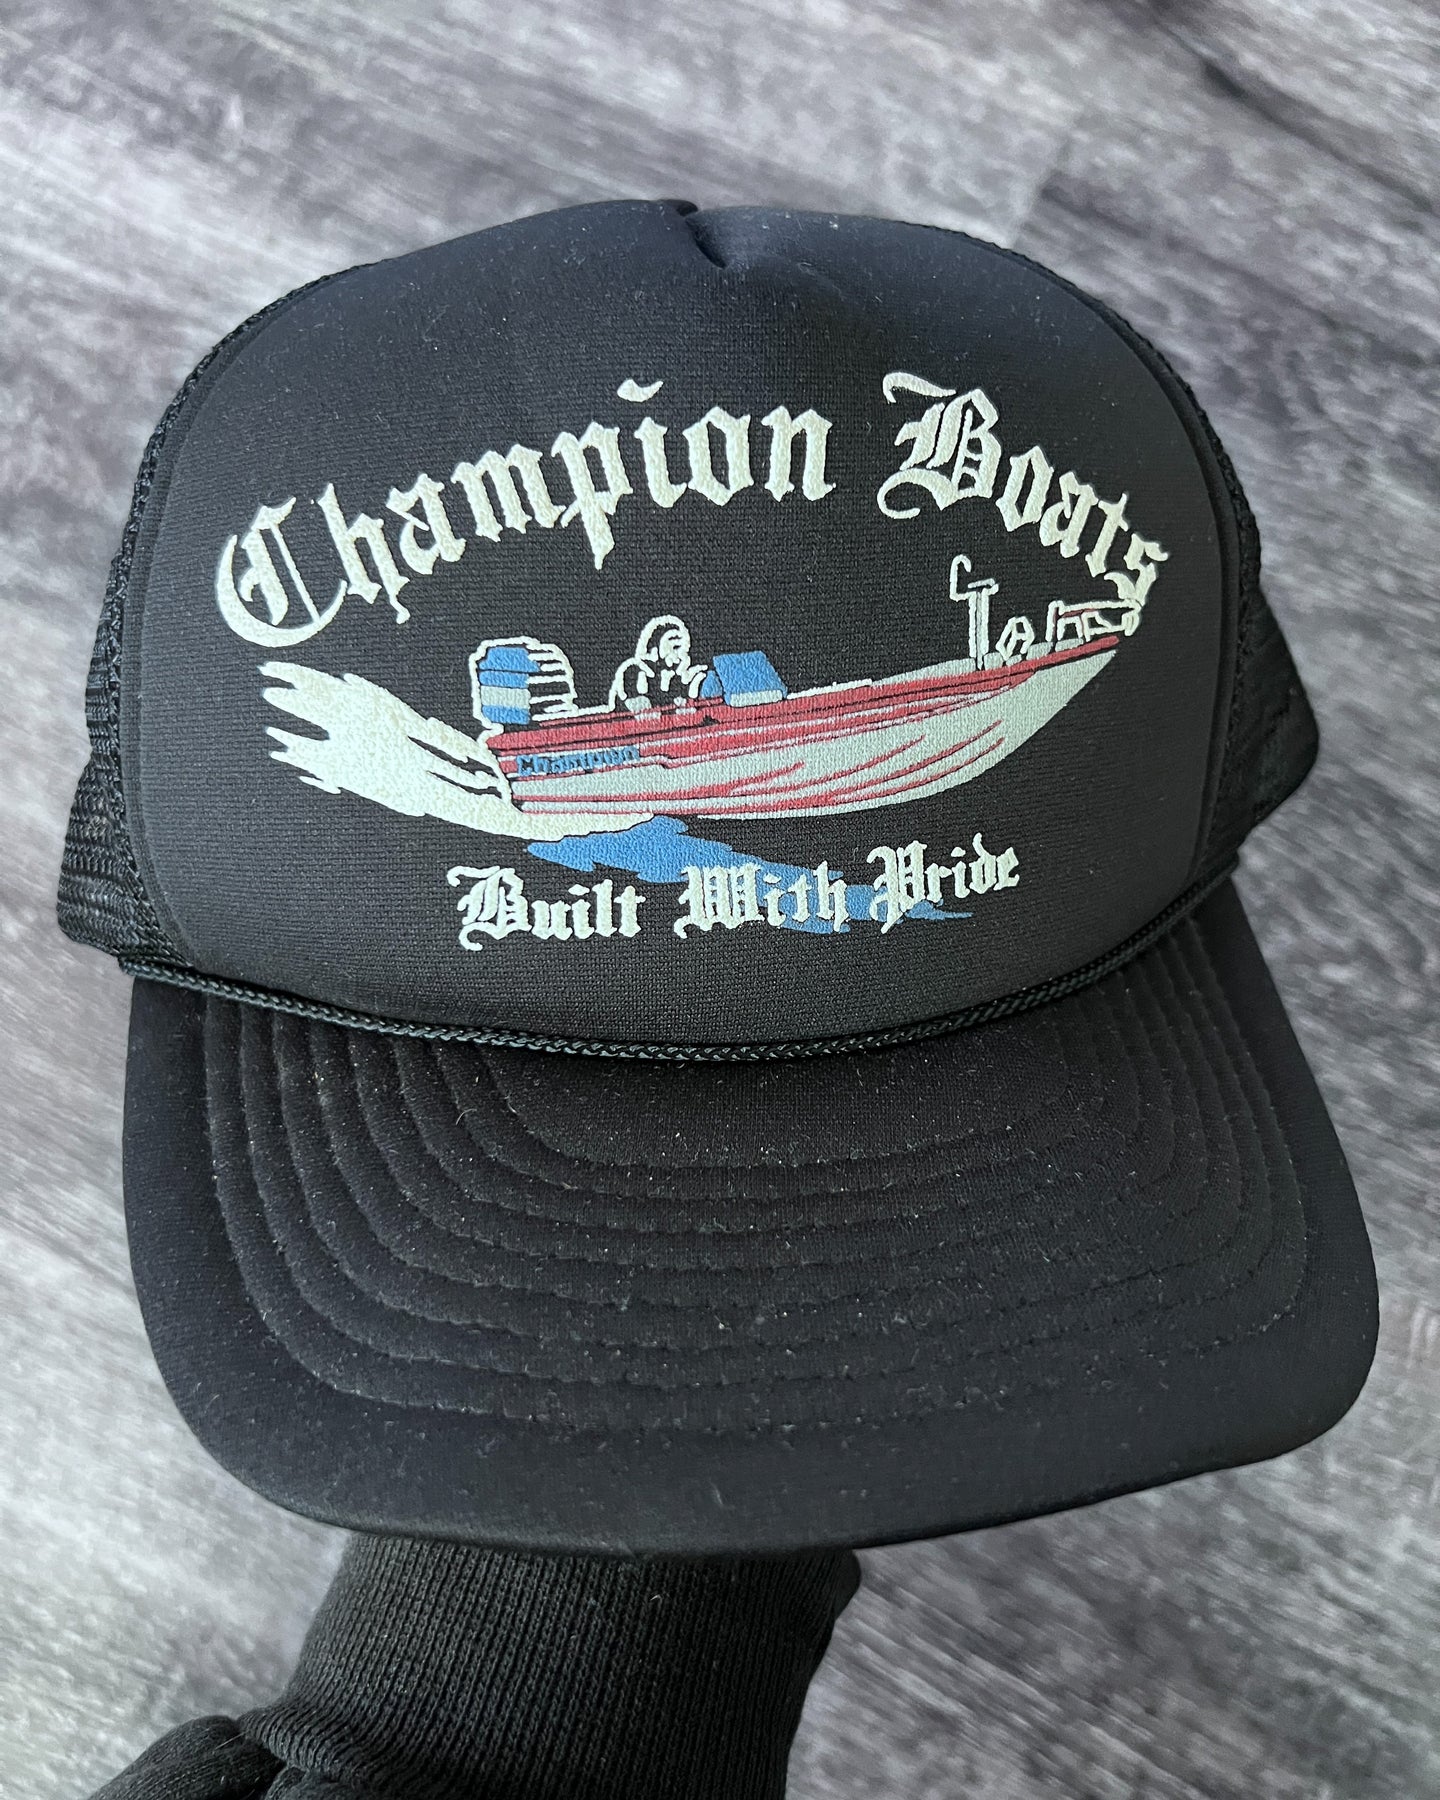 1980s Champion Boats Snapback Trucker Hat - One Size